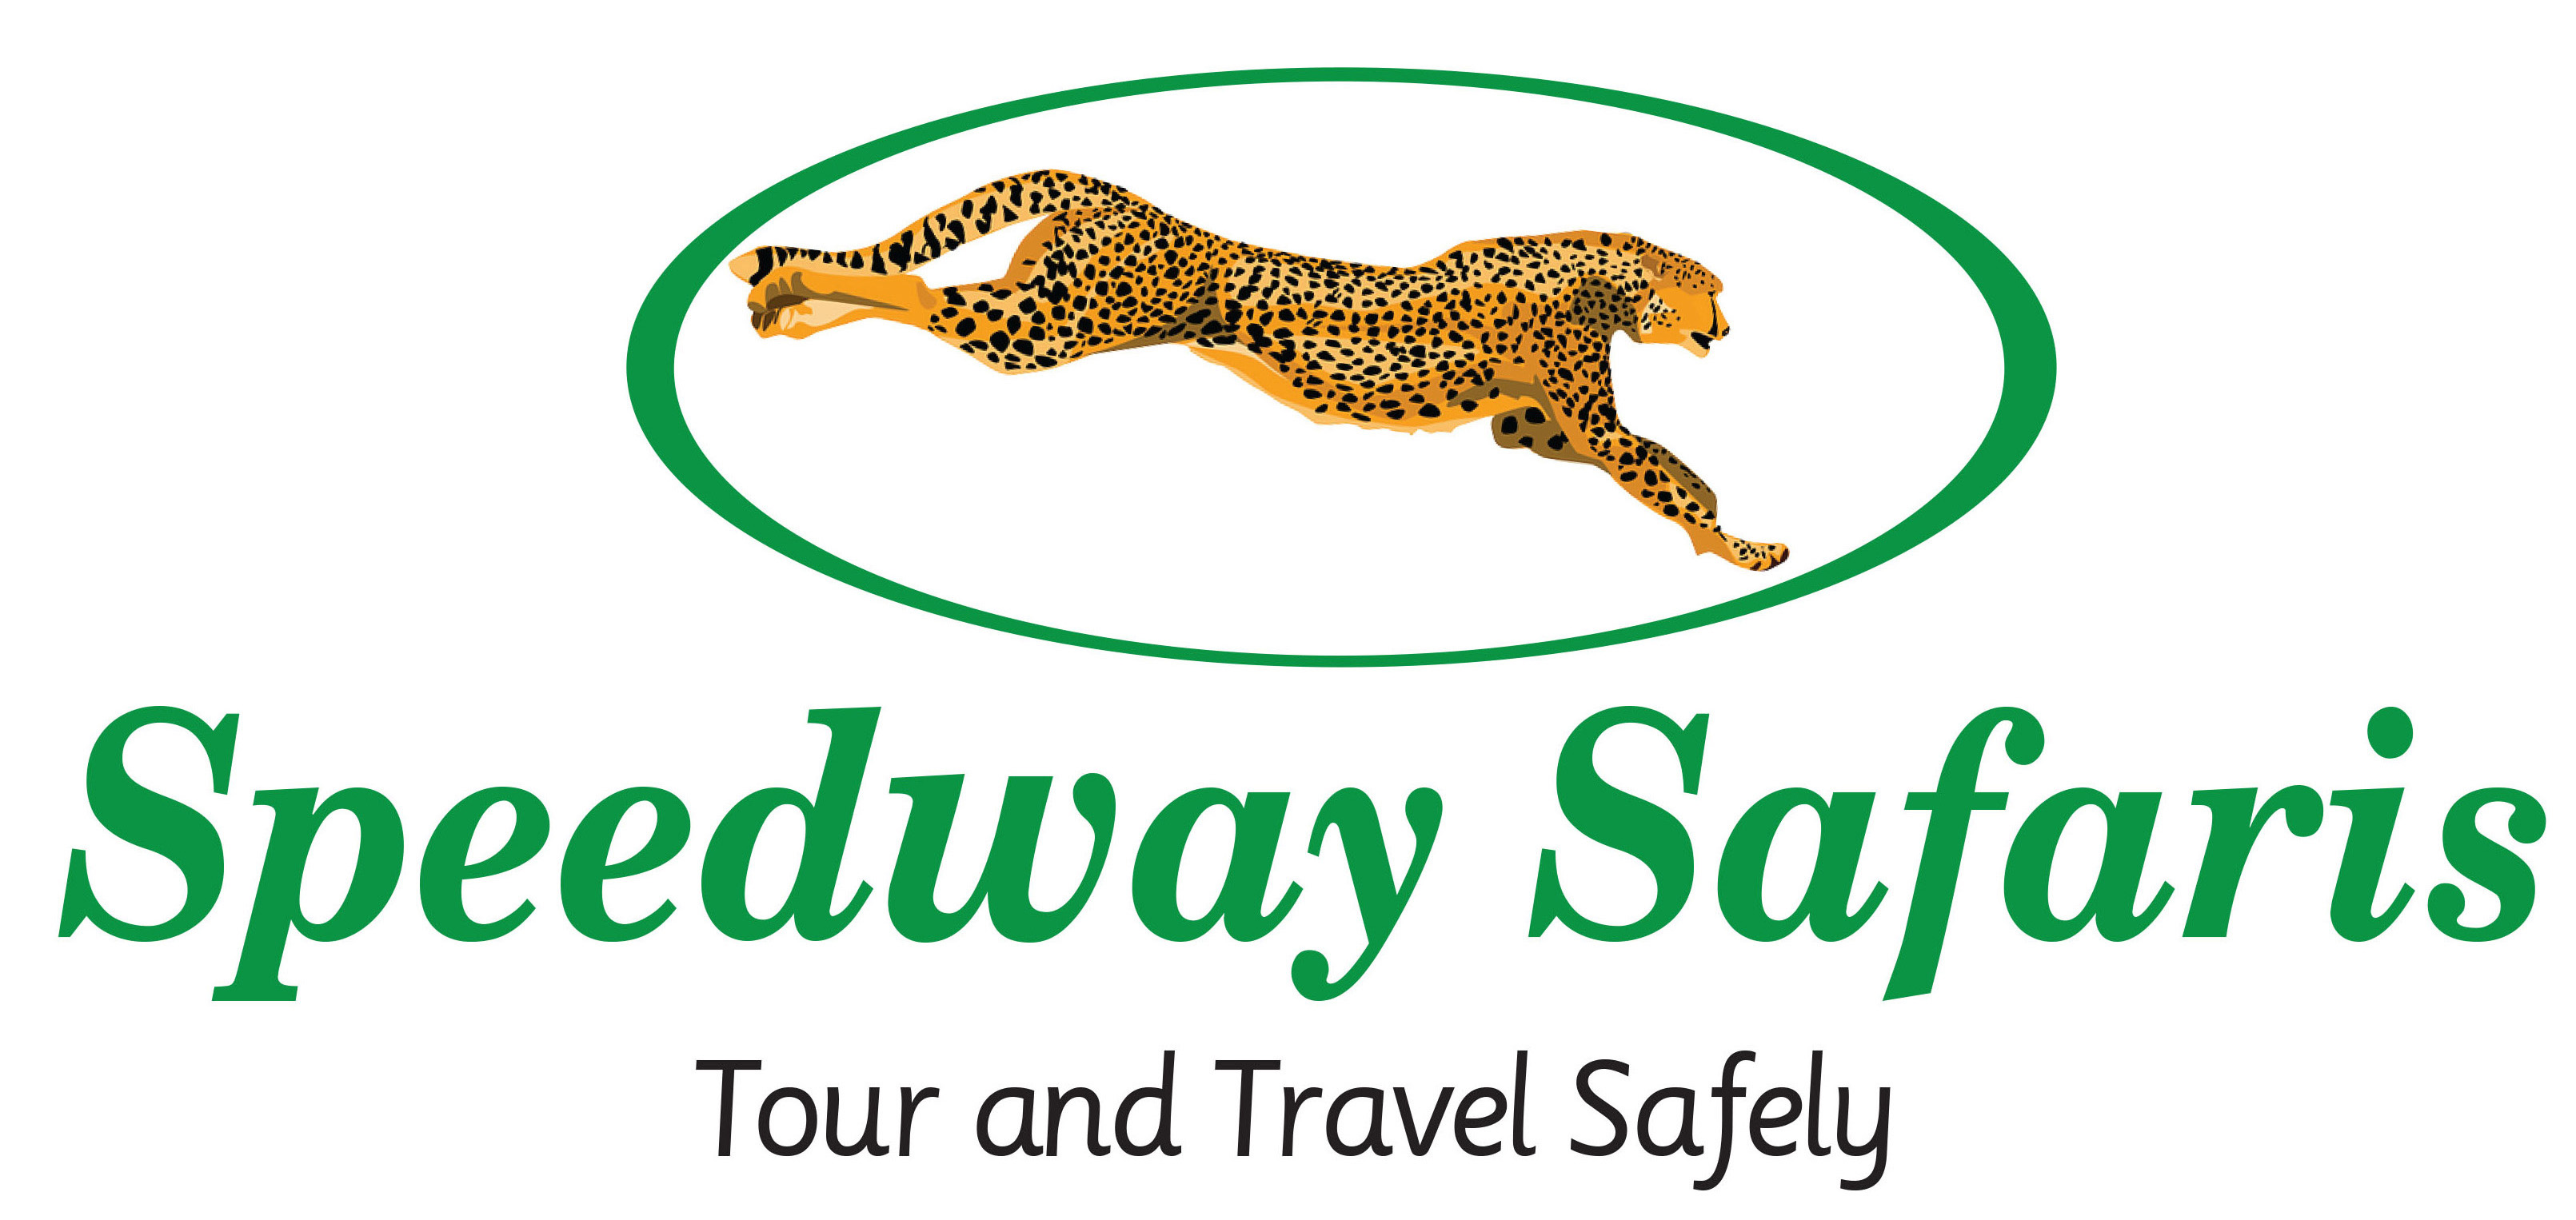 Speedway Safaris Ltd